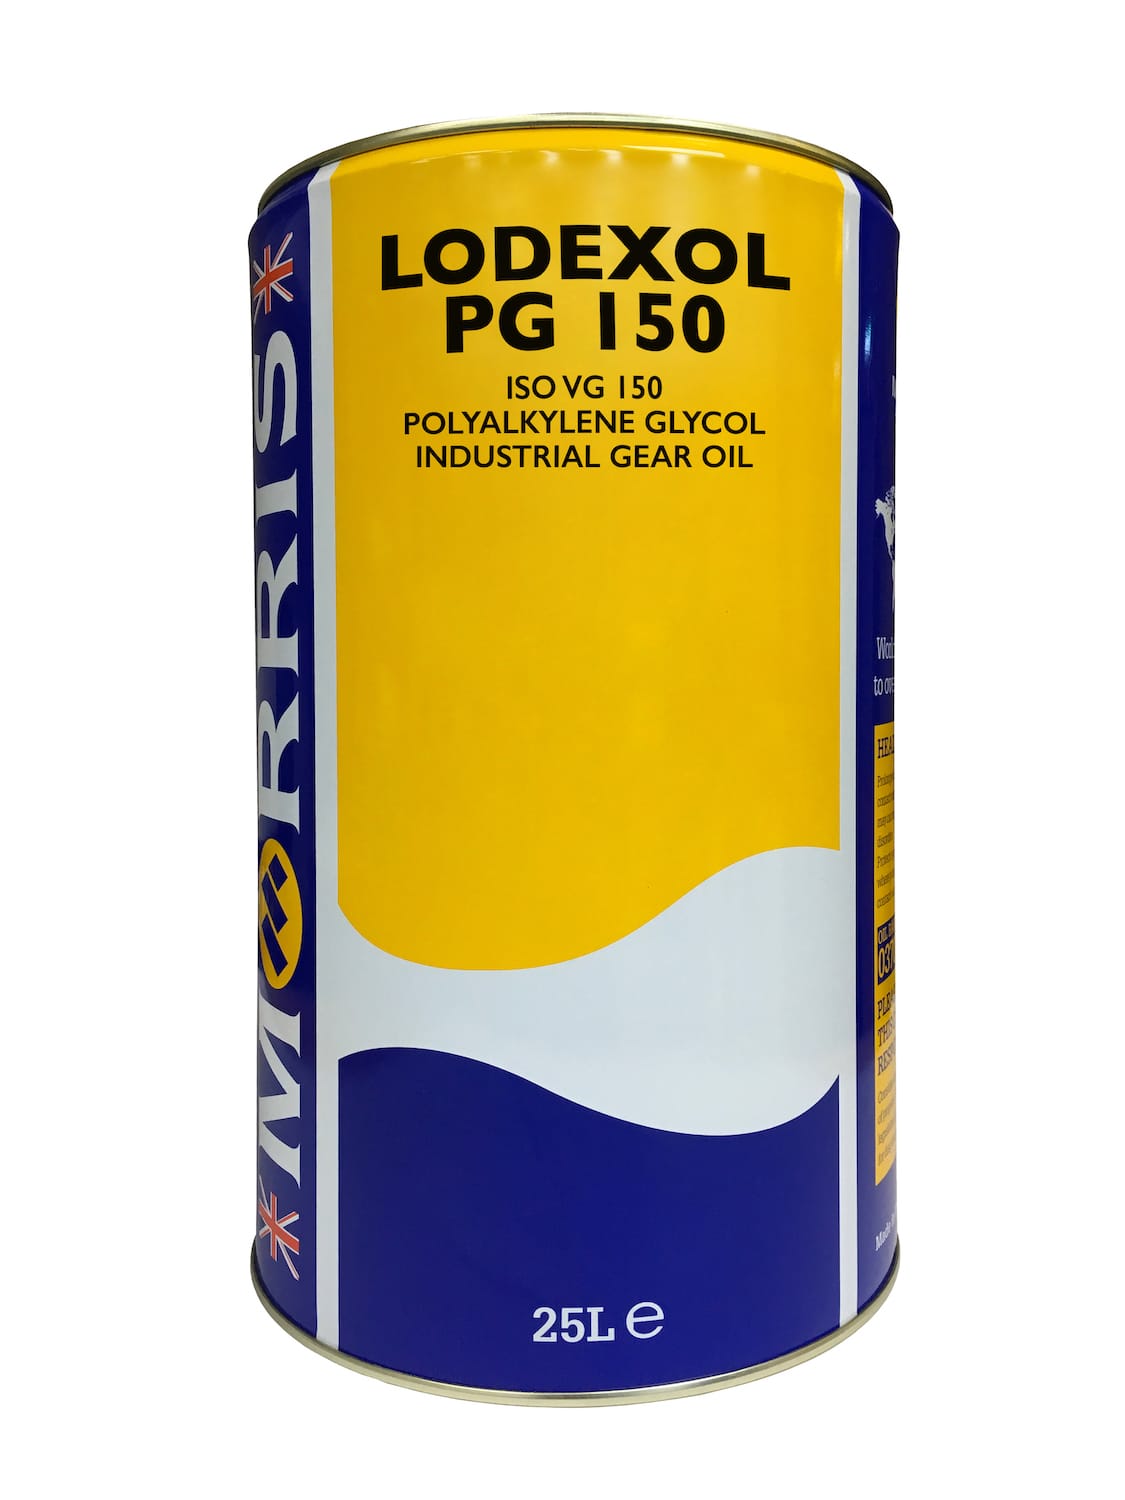 Lodexol PG 150